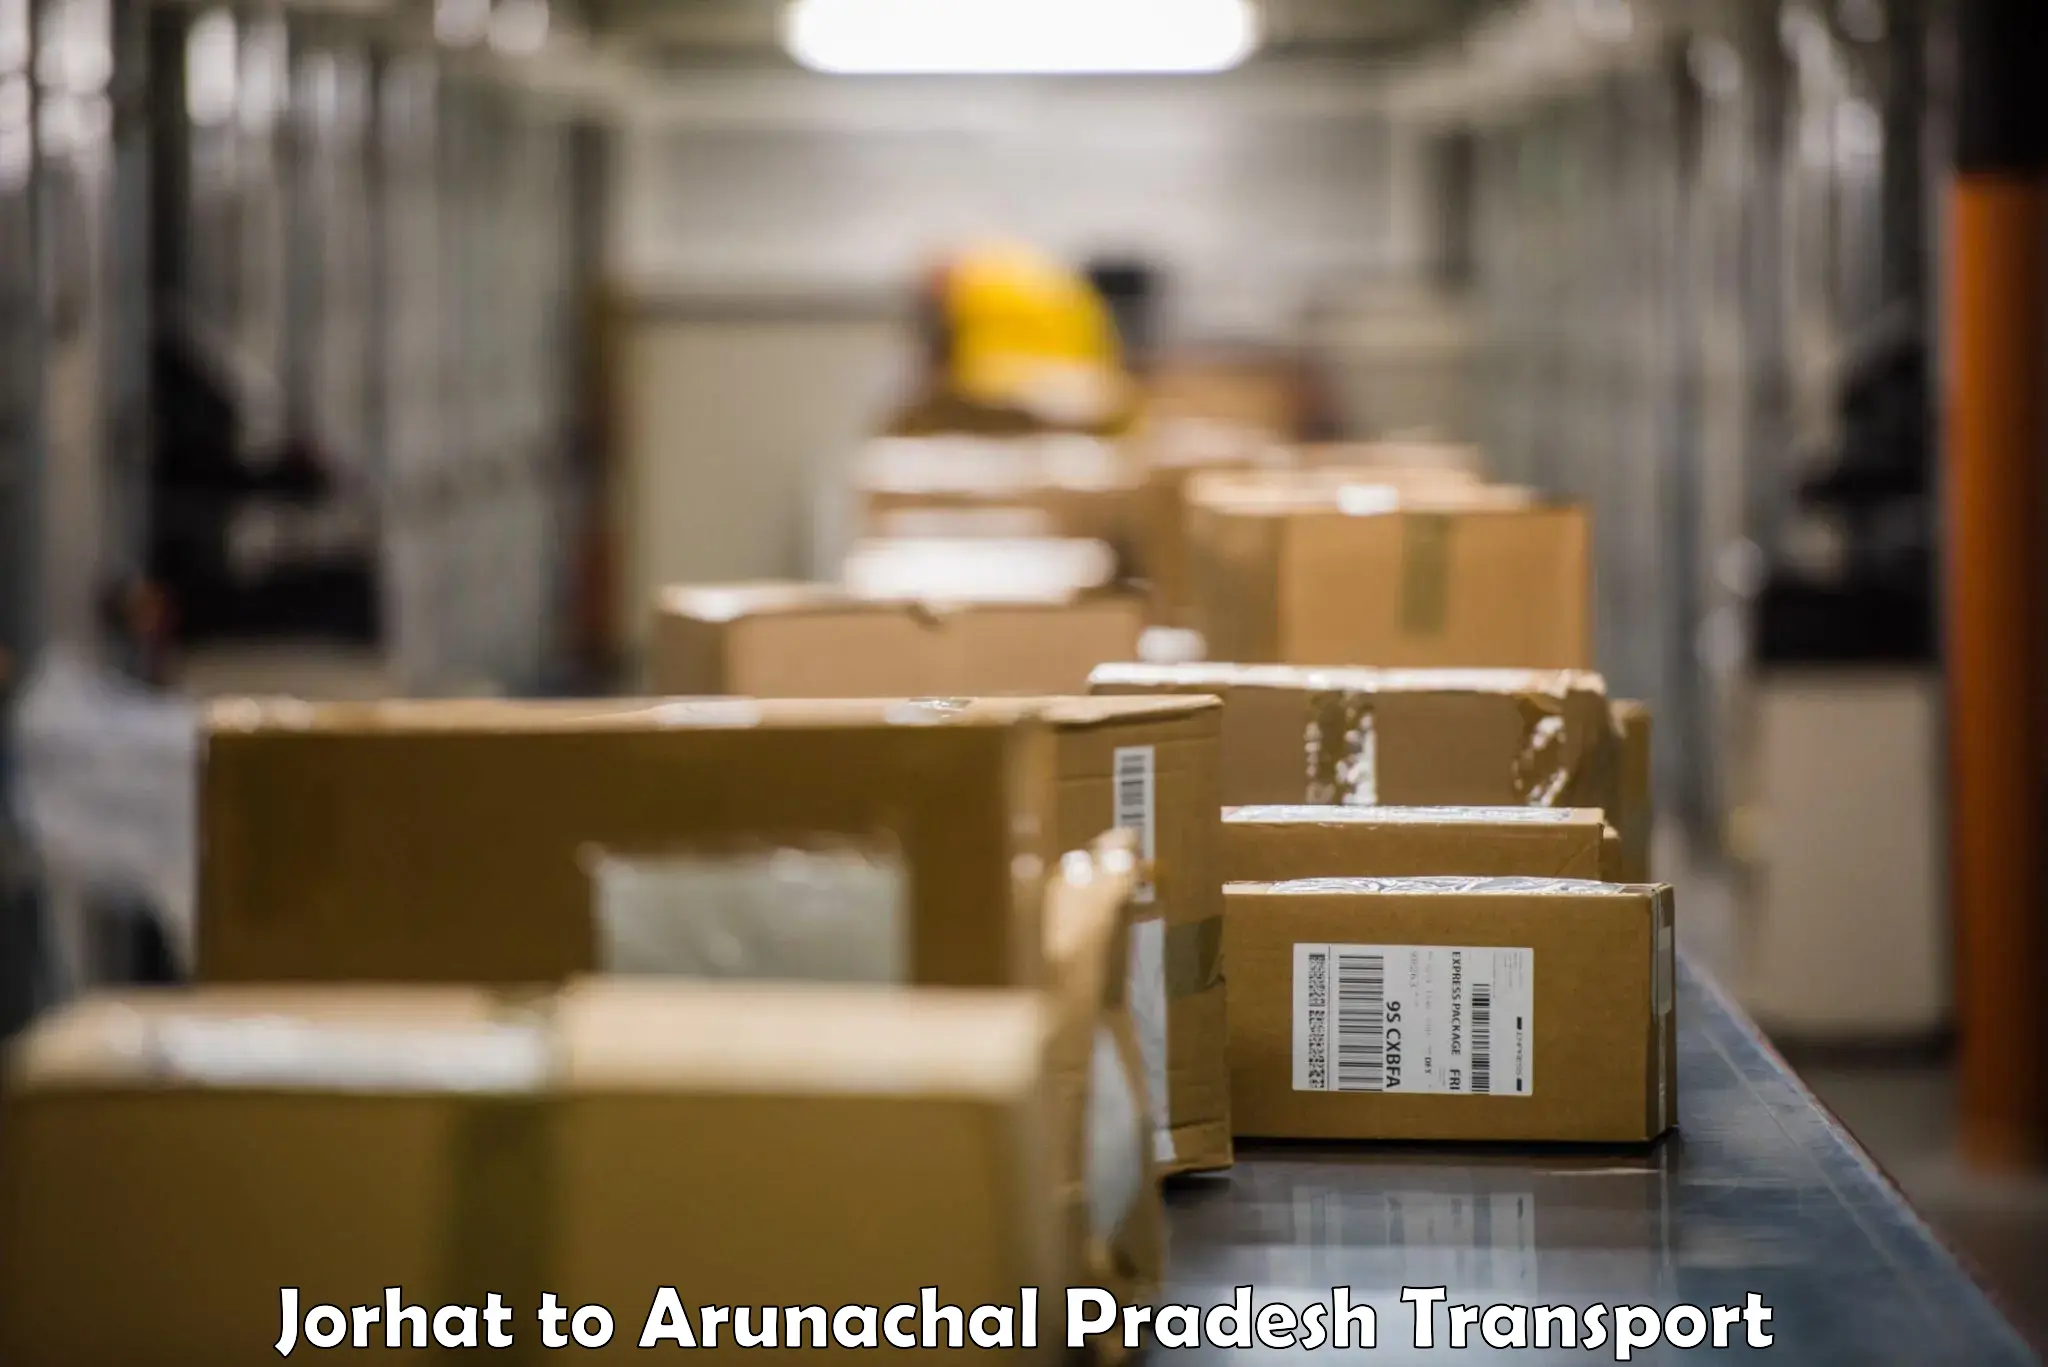 Truck transport companies in India Jorhat to Itanagar